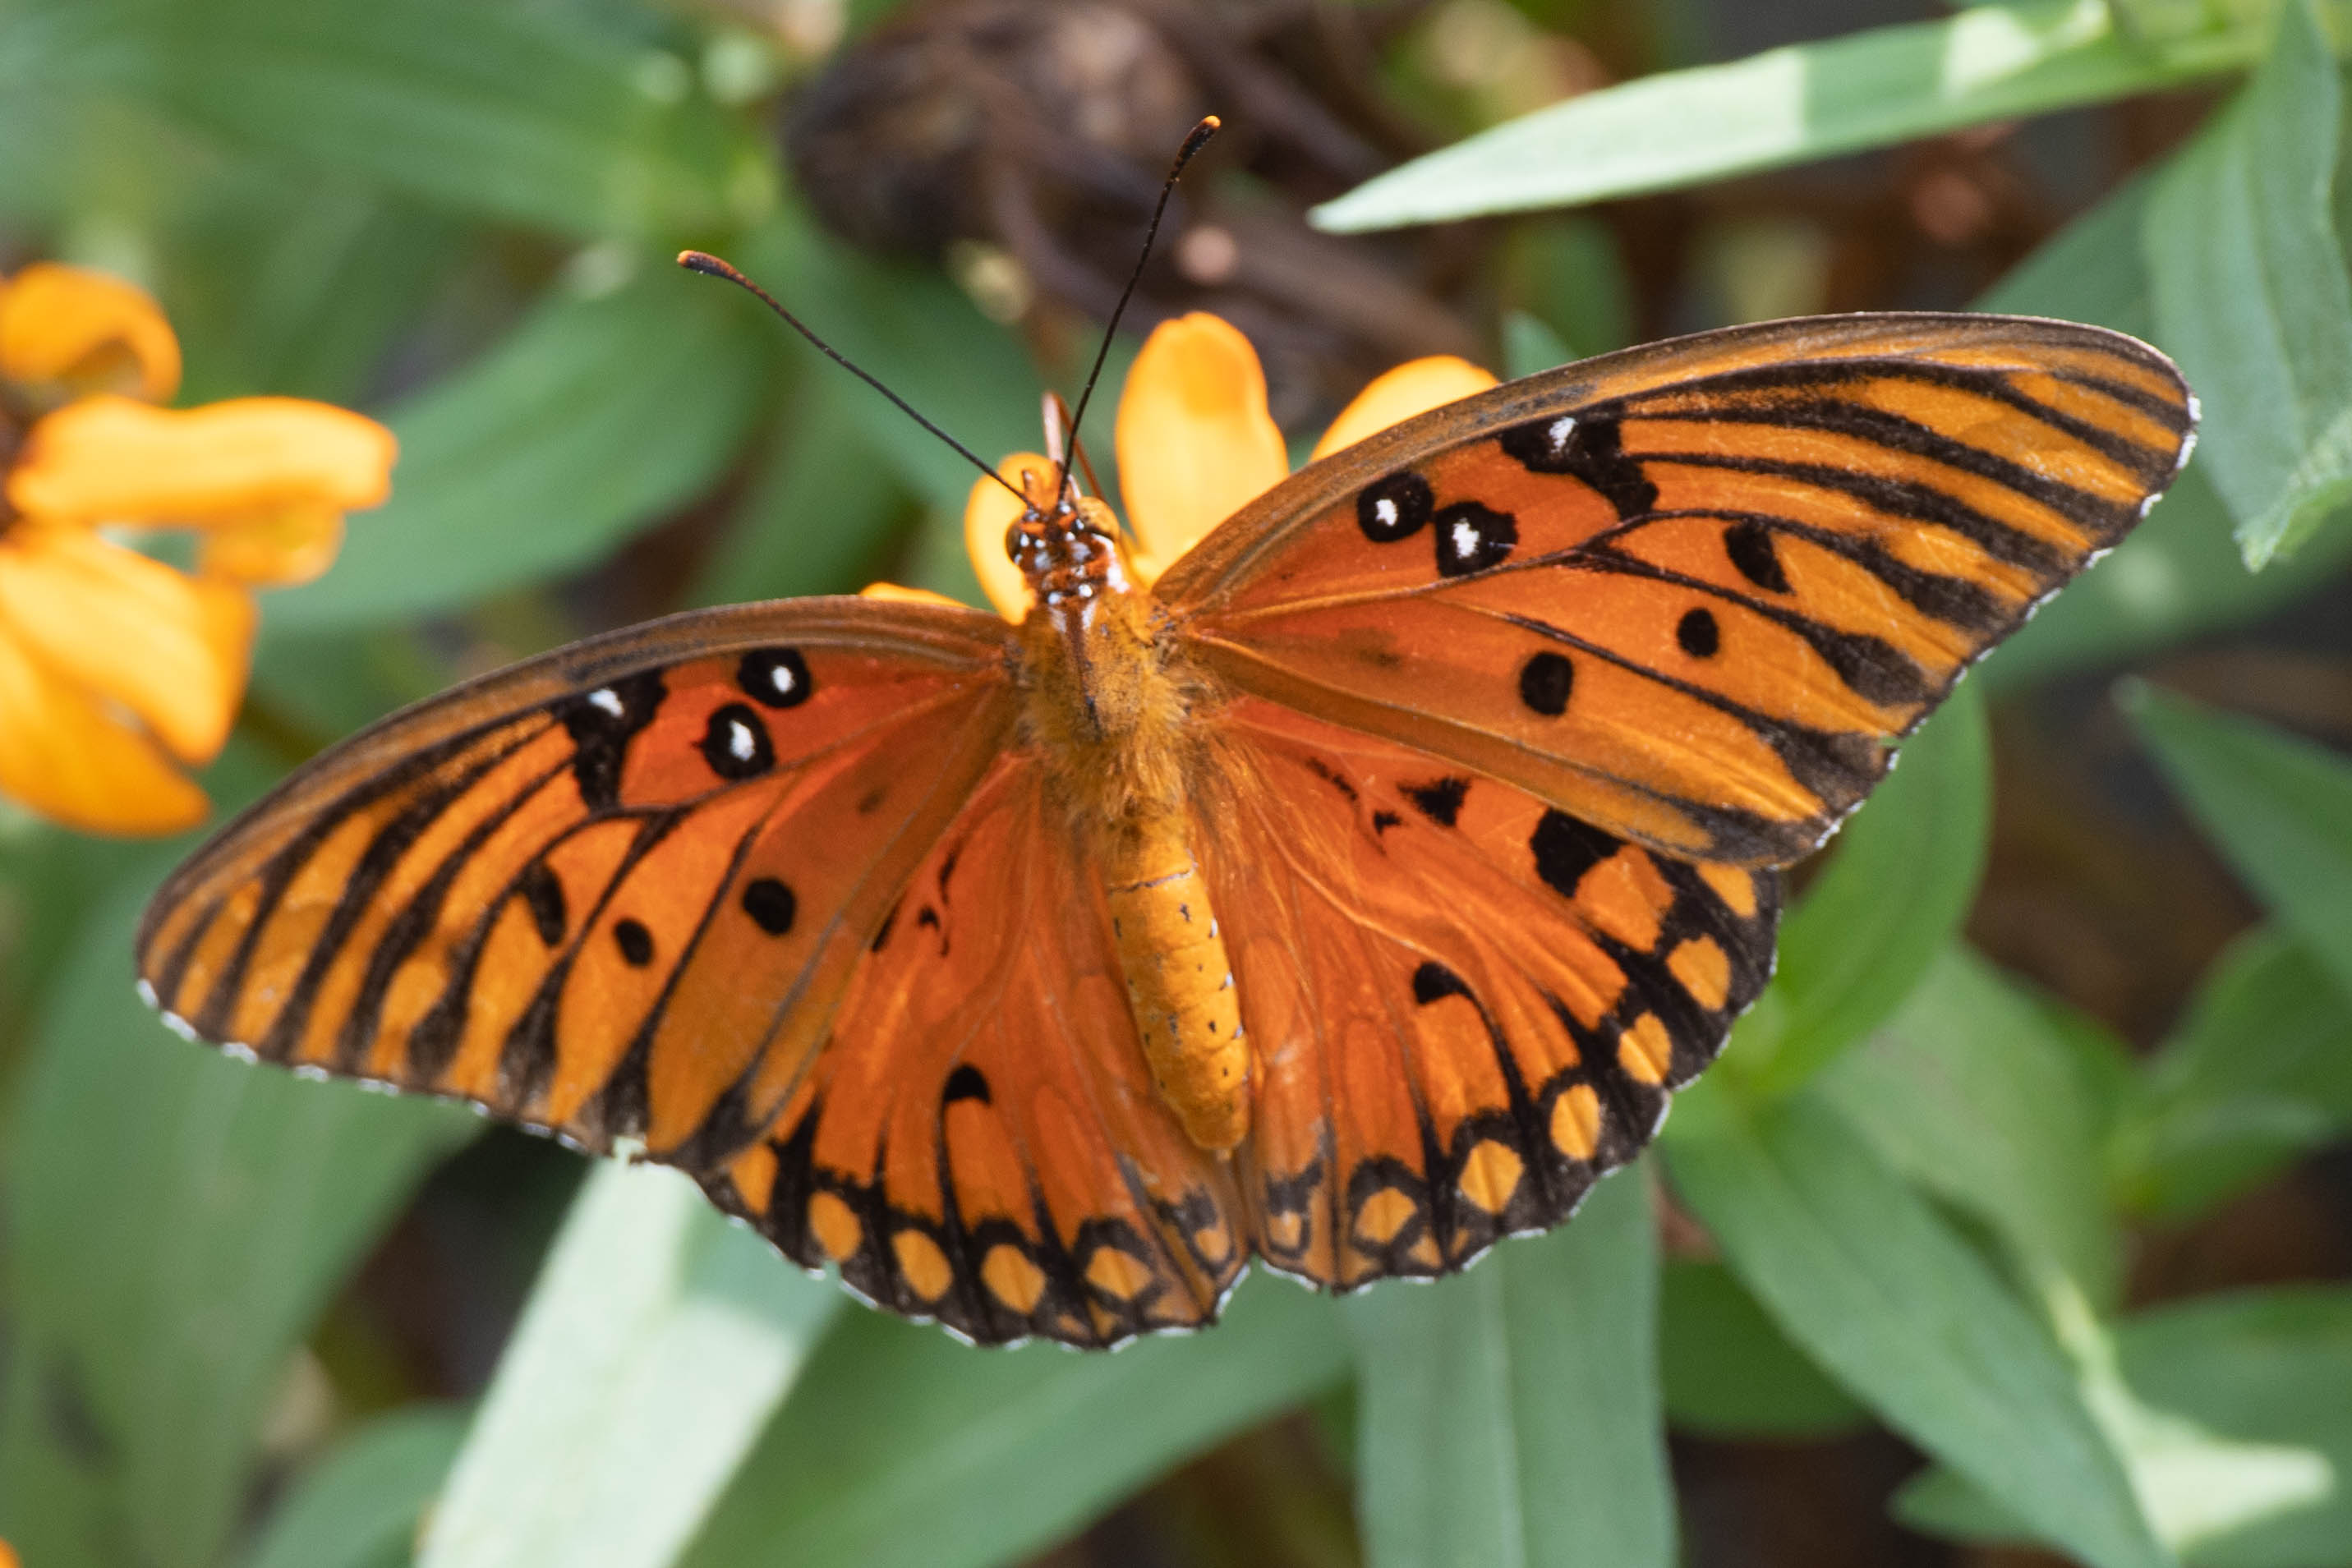 jim-west-collierville-tn-wildlife-nature-butterfly-92